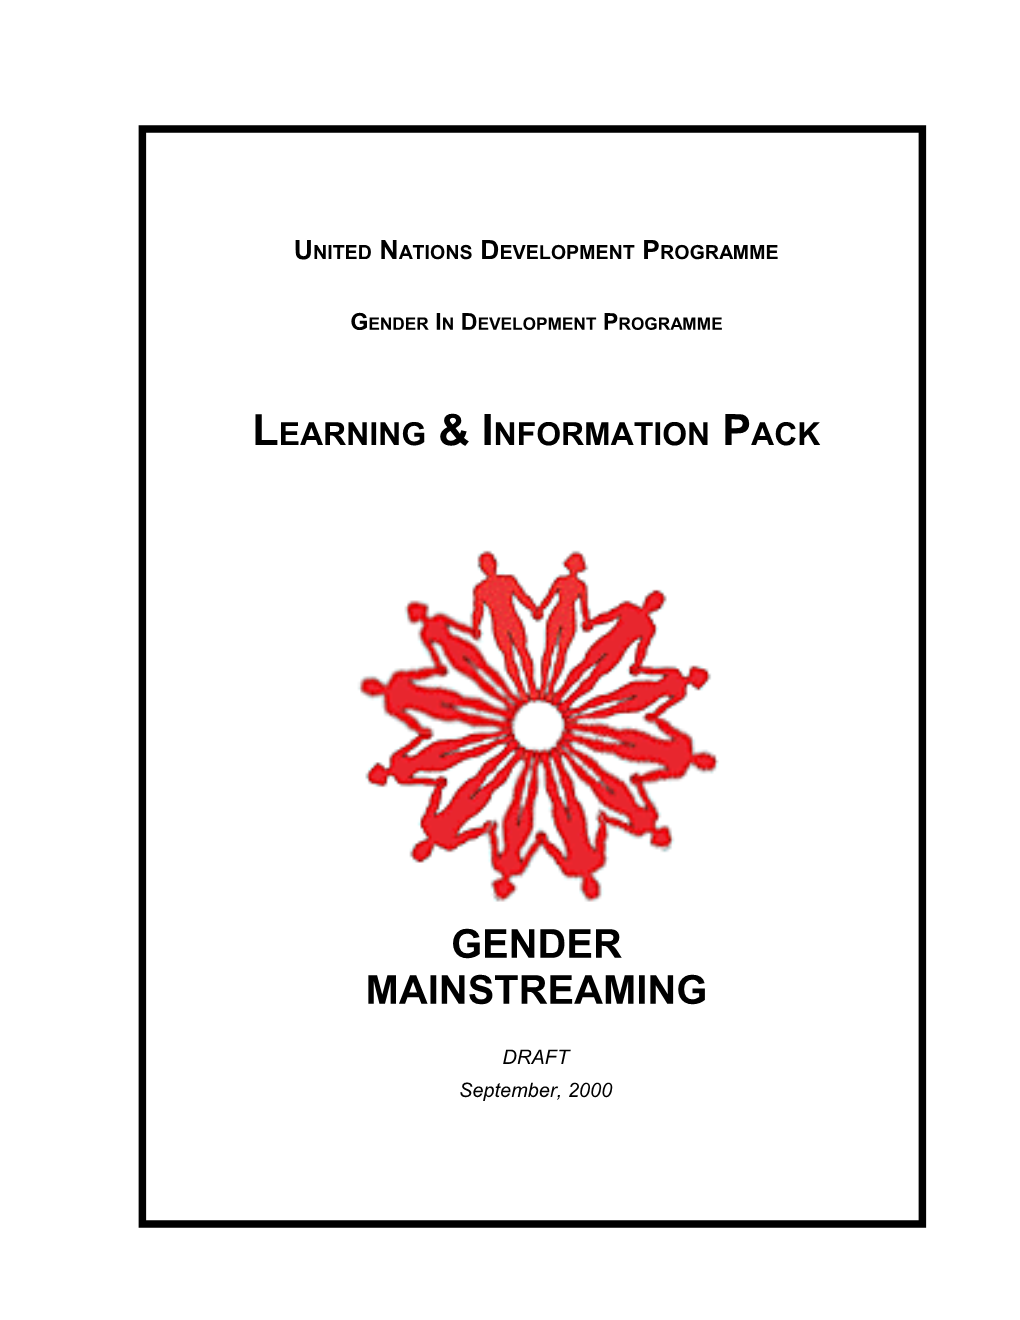 Gender Mainstreaming Information Pack